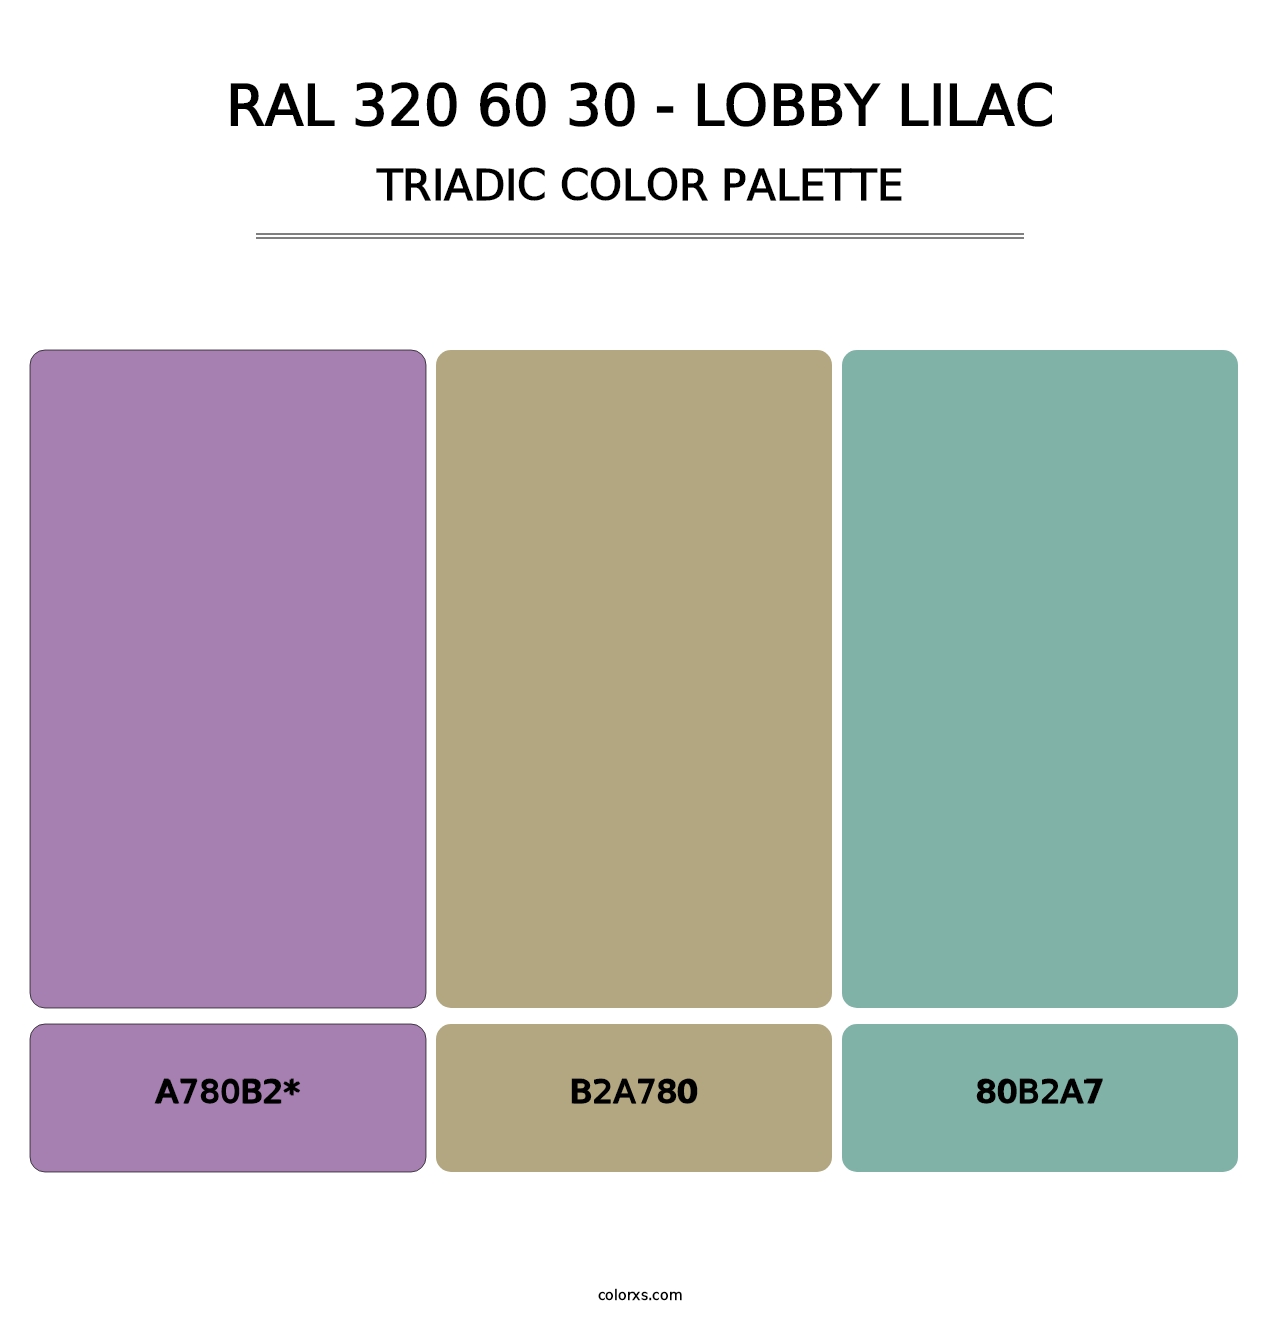 RAL 320 60 30 - Lobby Lilac - Triadic Color Palette